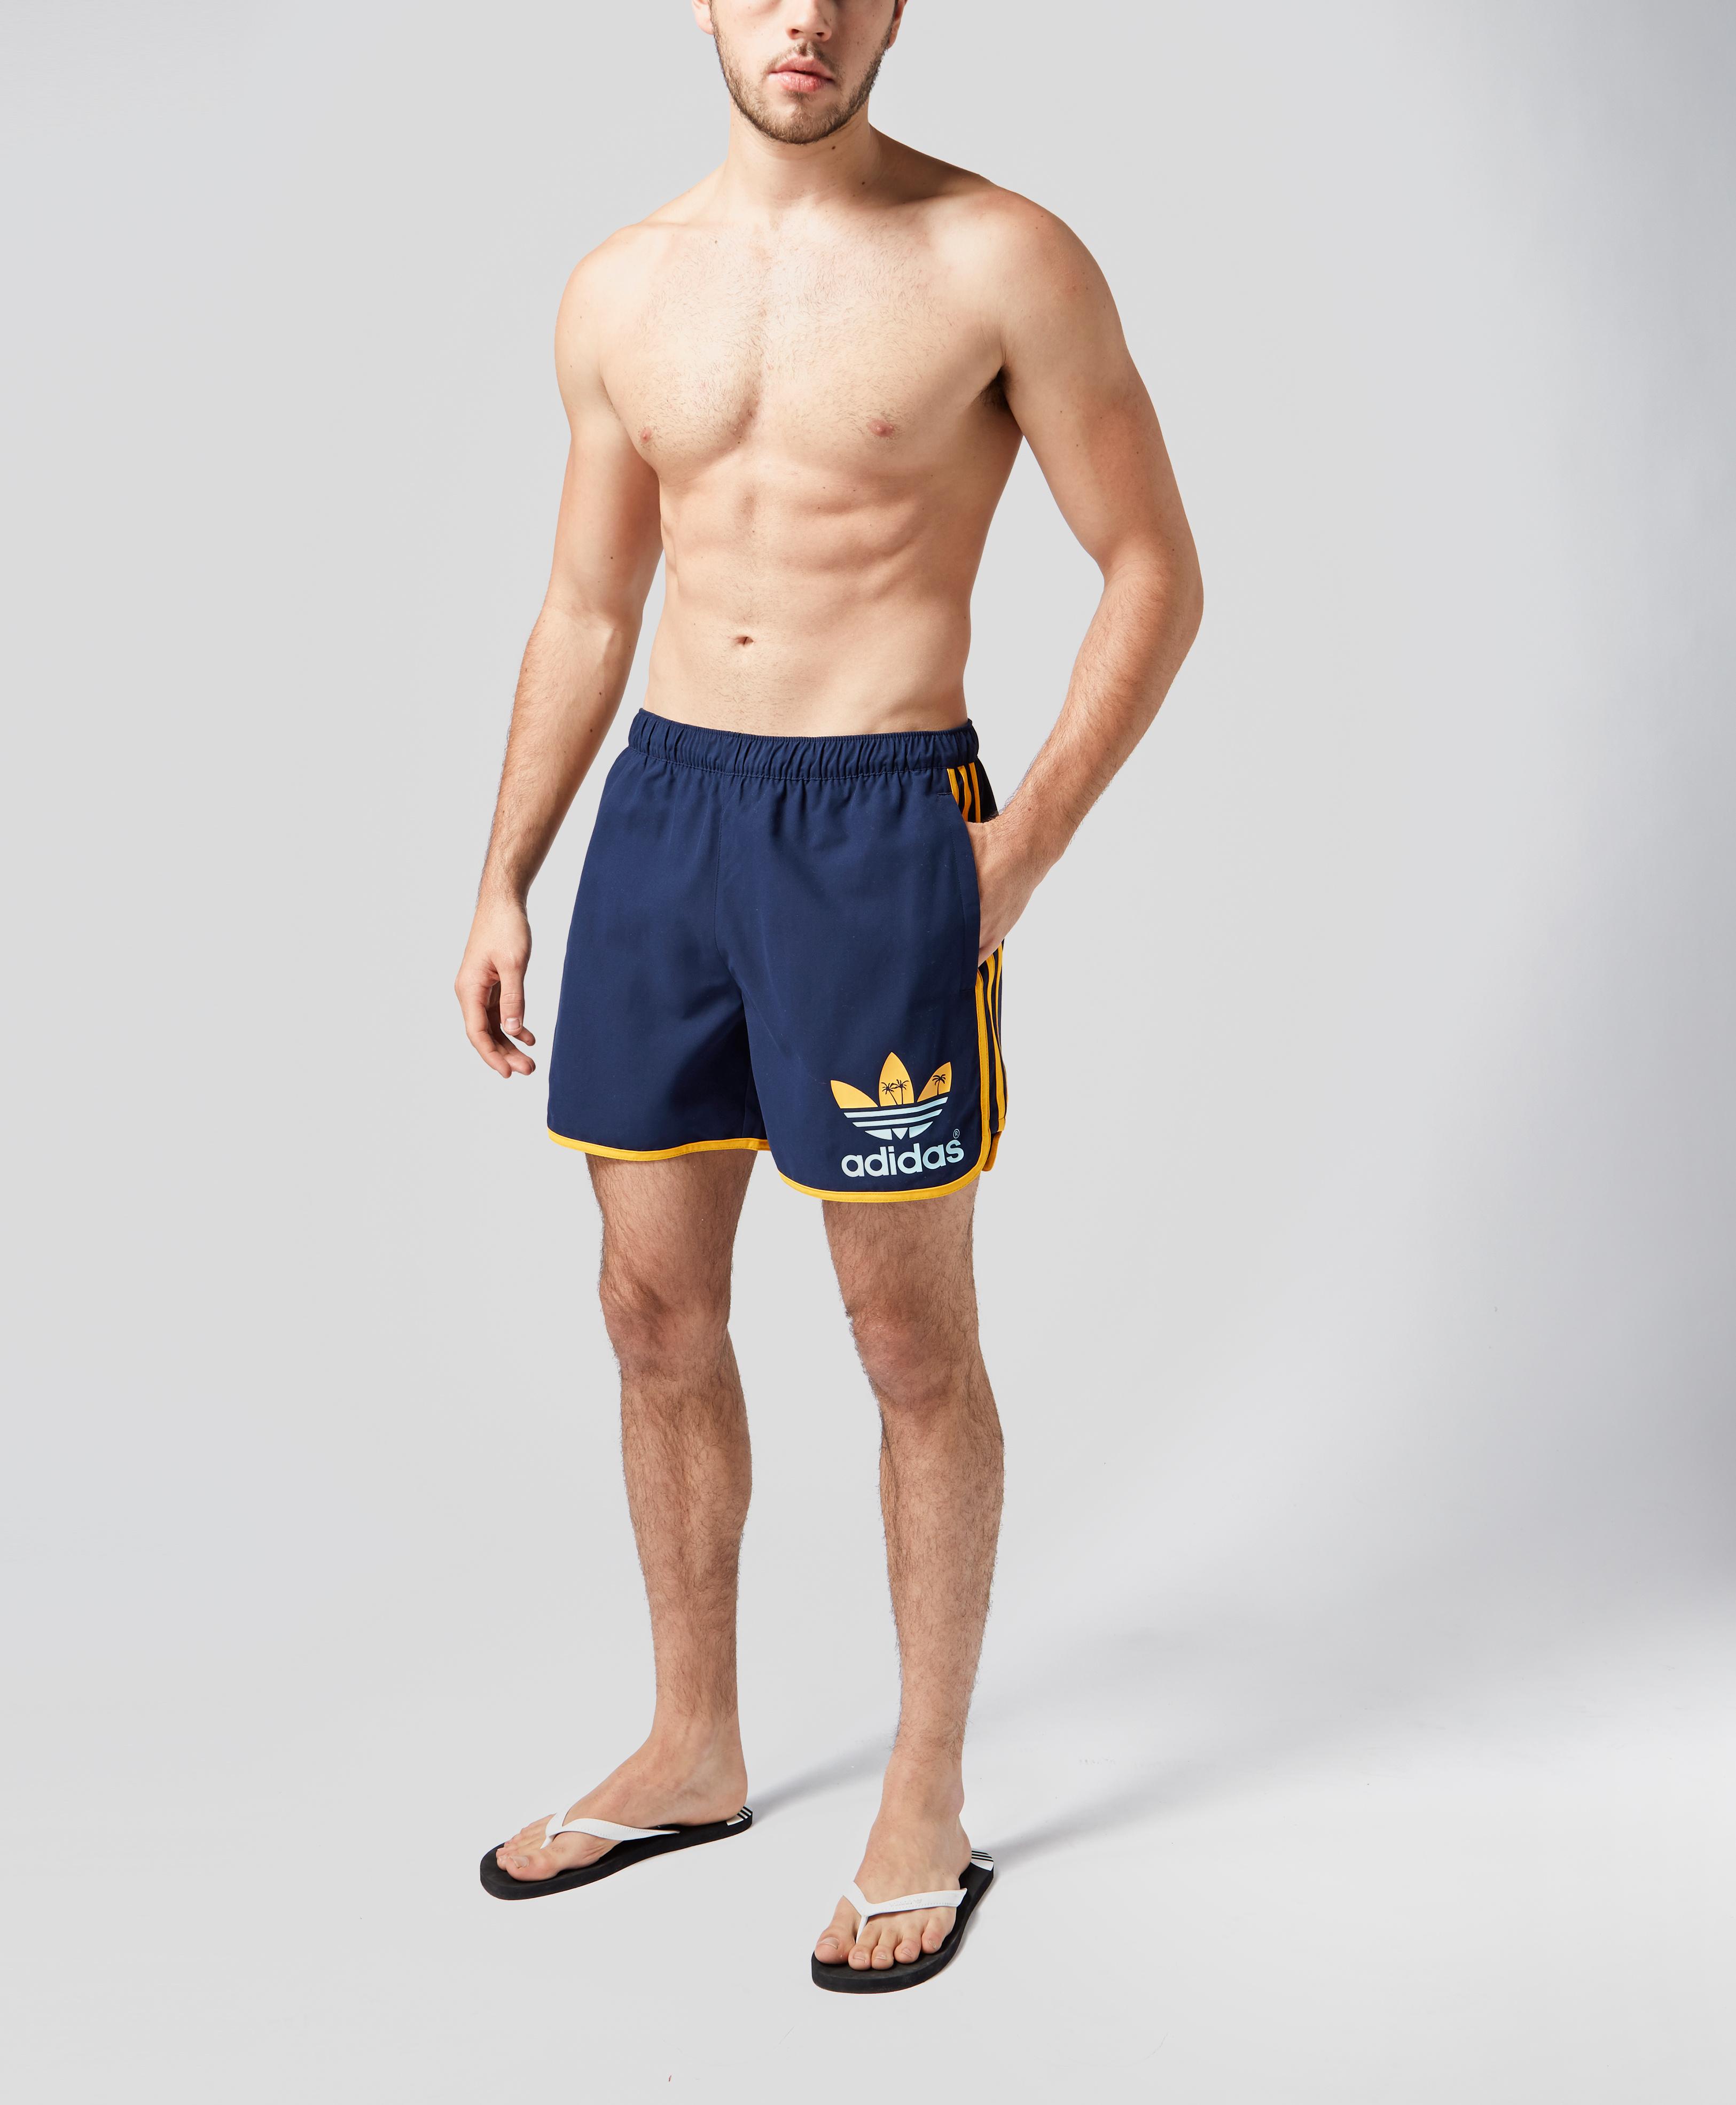 adidas originals island swim shorts